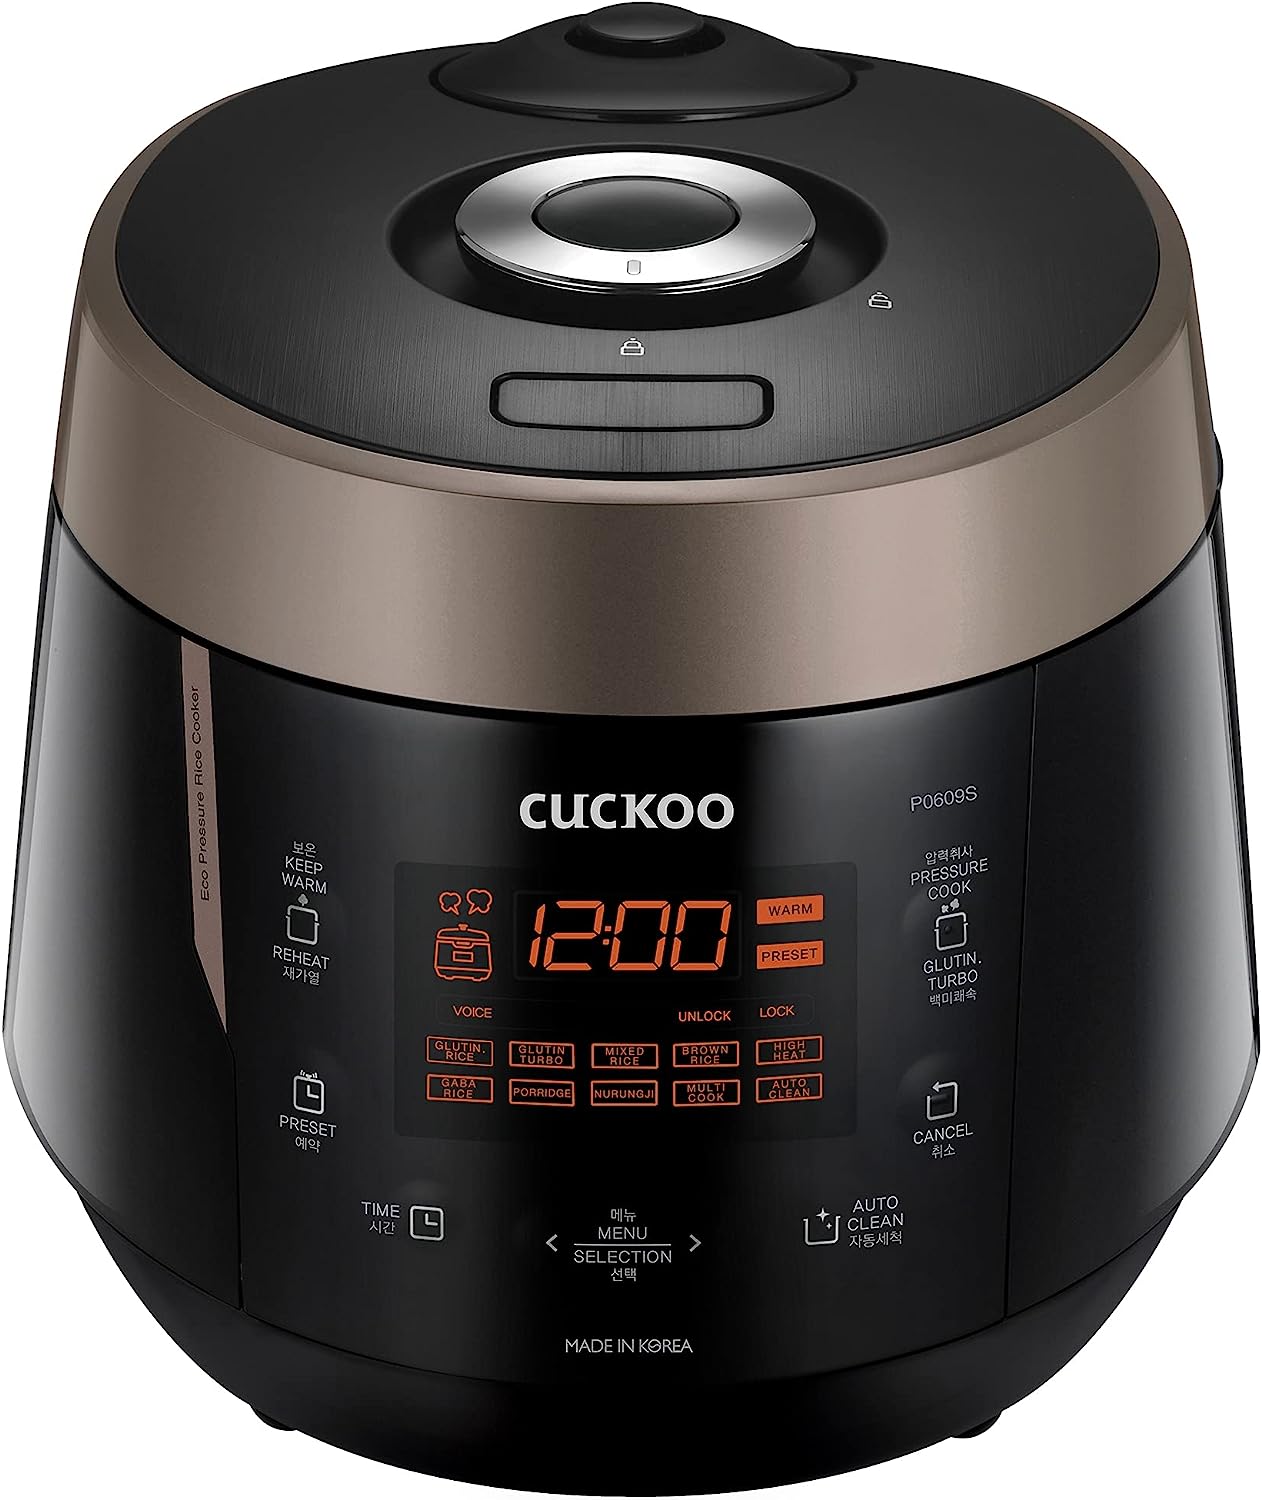 Cuckoo-Rice-Cooker